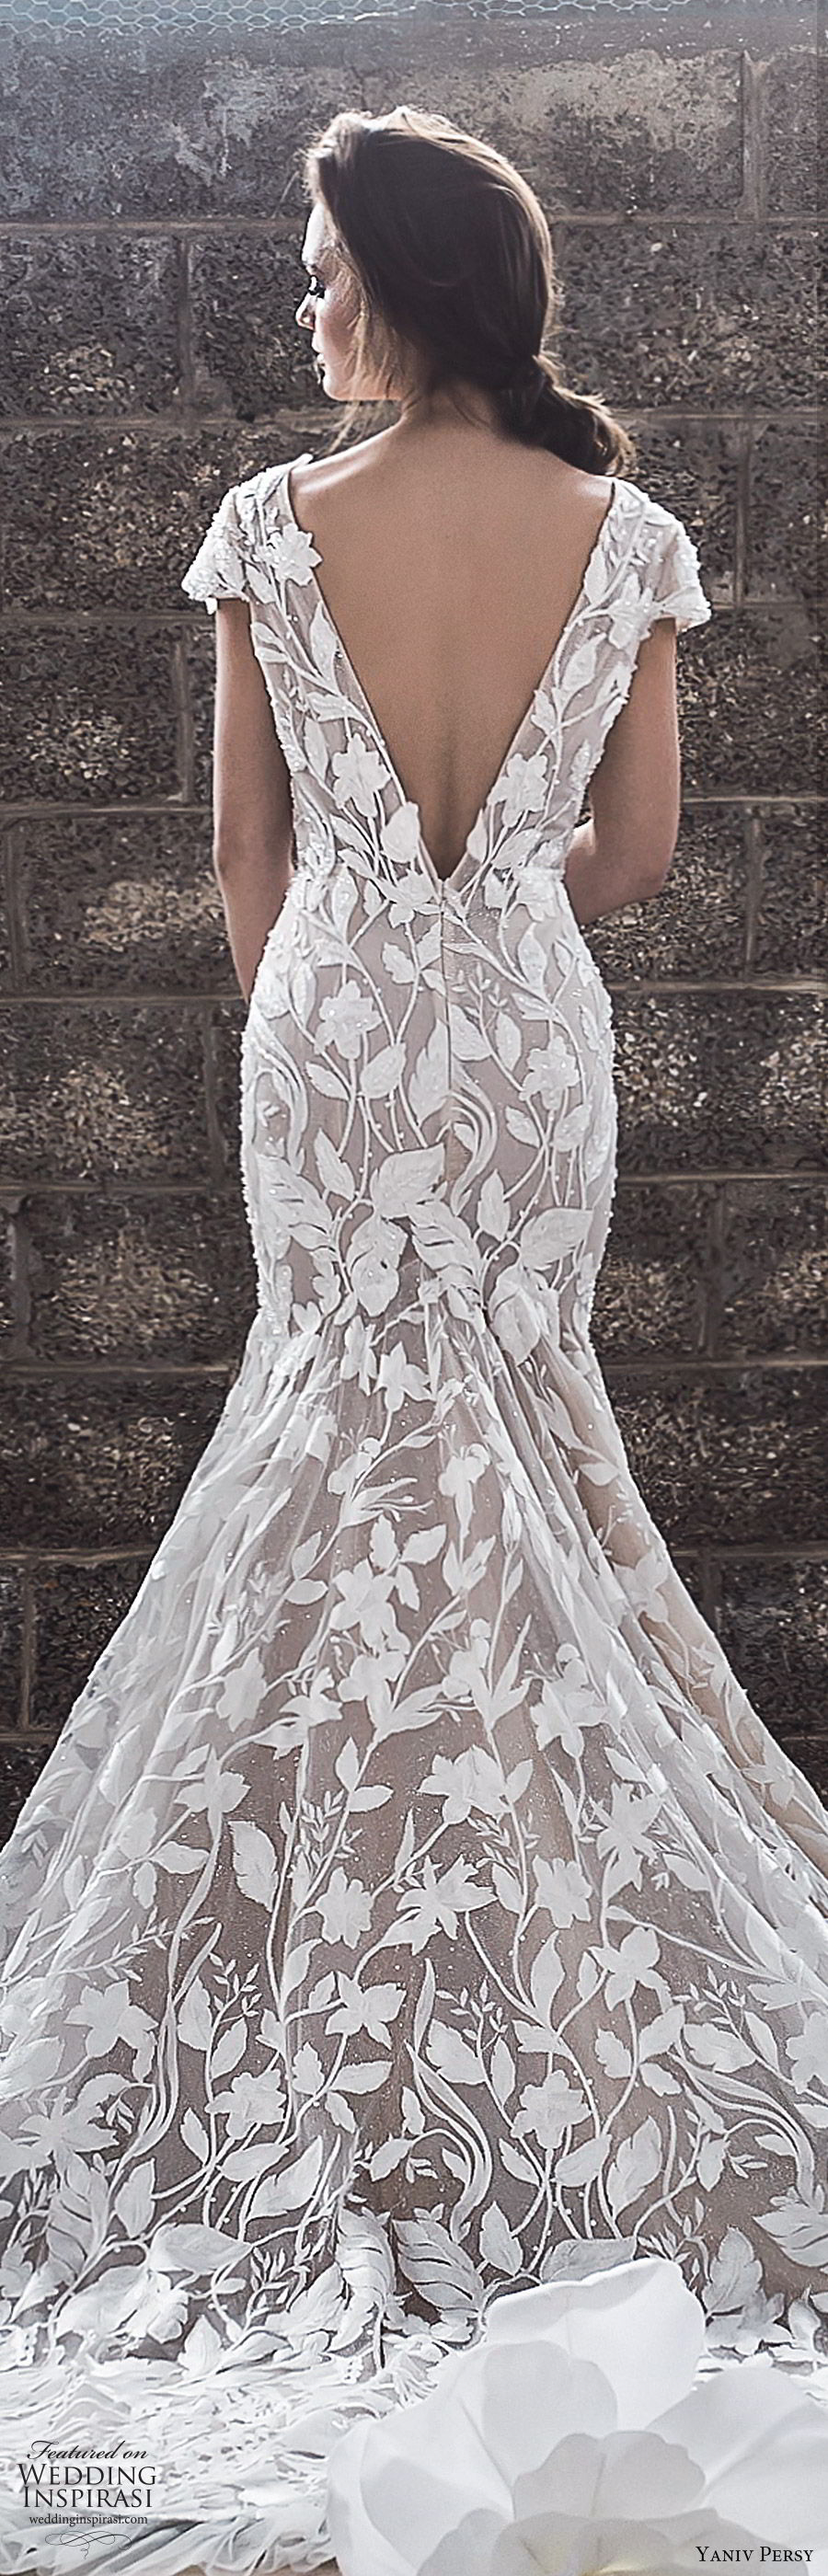 yaniv persy spring 2020 bridal couture cap sleeves deep plunging v neckline heavily embellished sheath wedding dress (3) v back chapel train elegant modern zbv